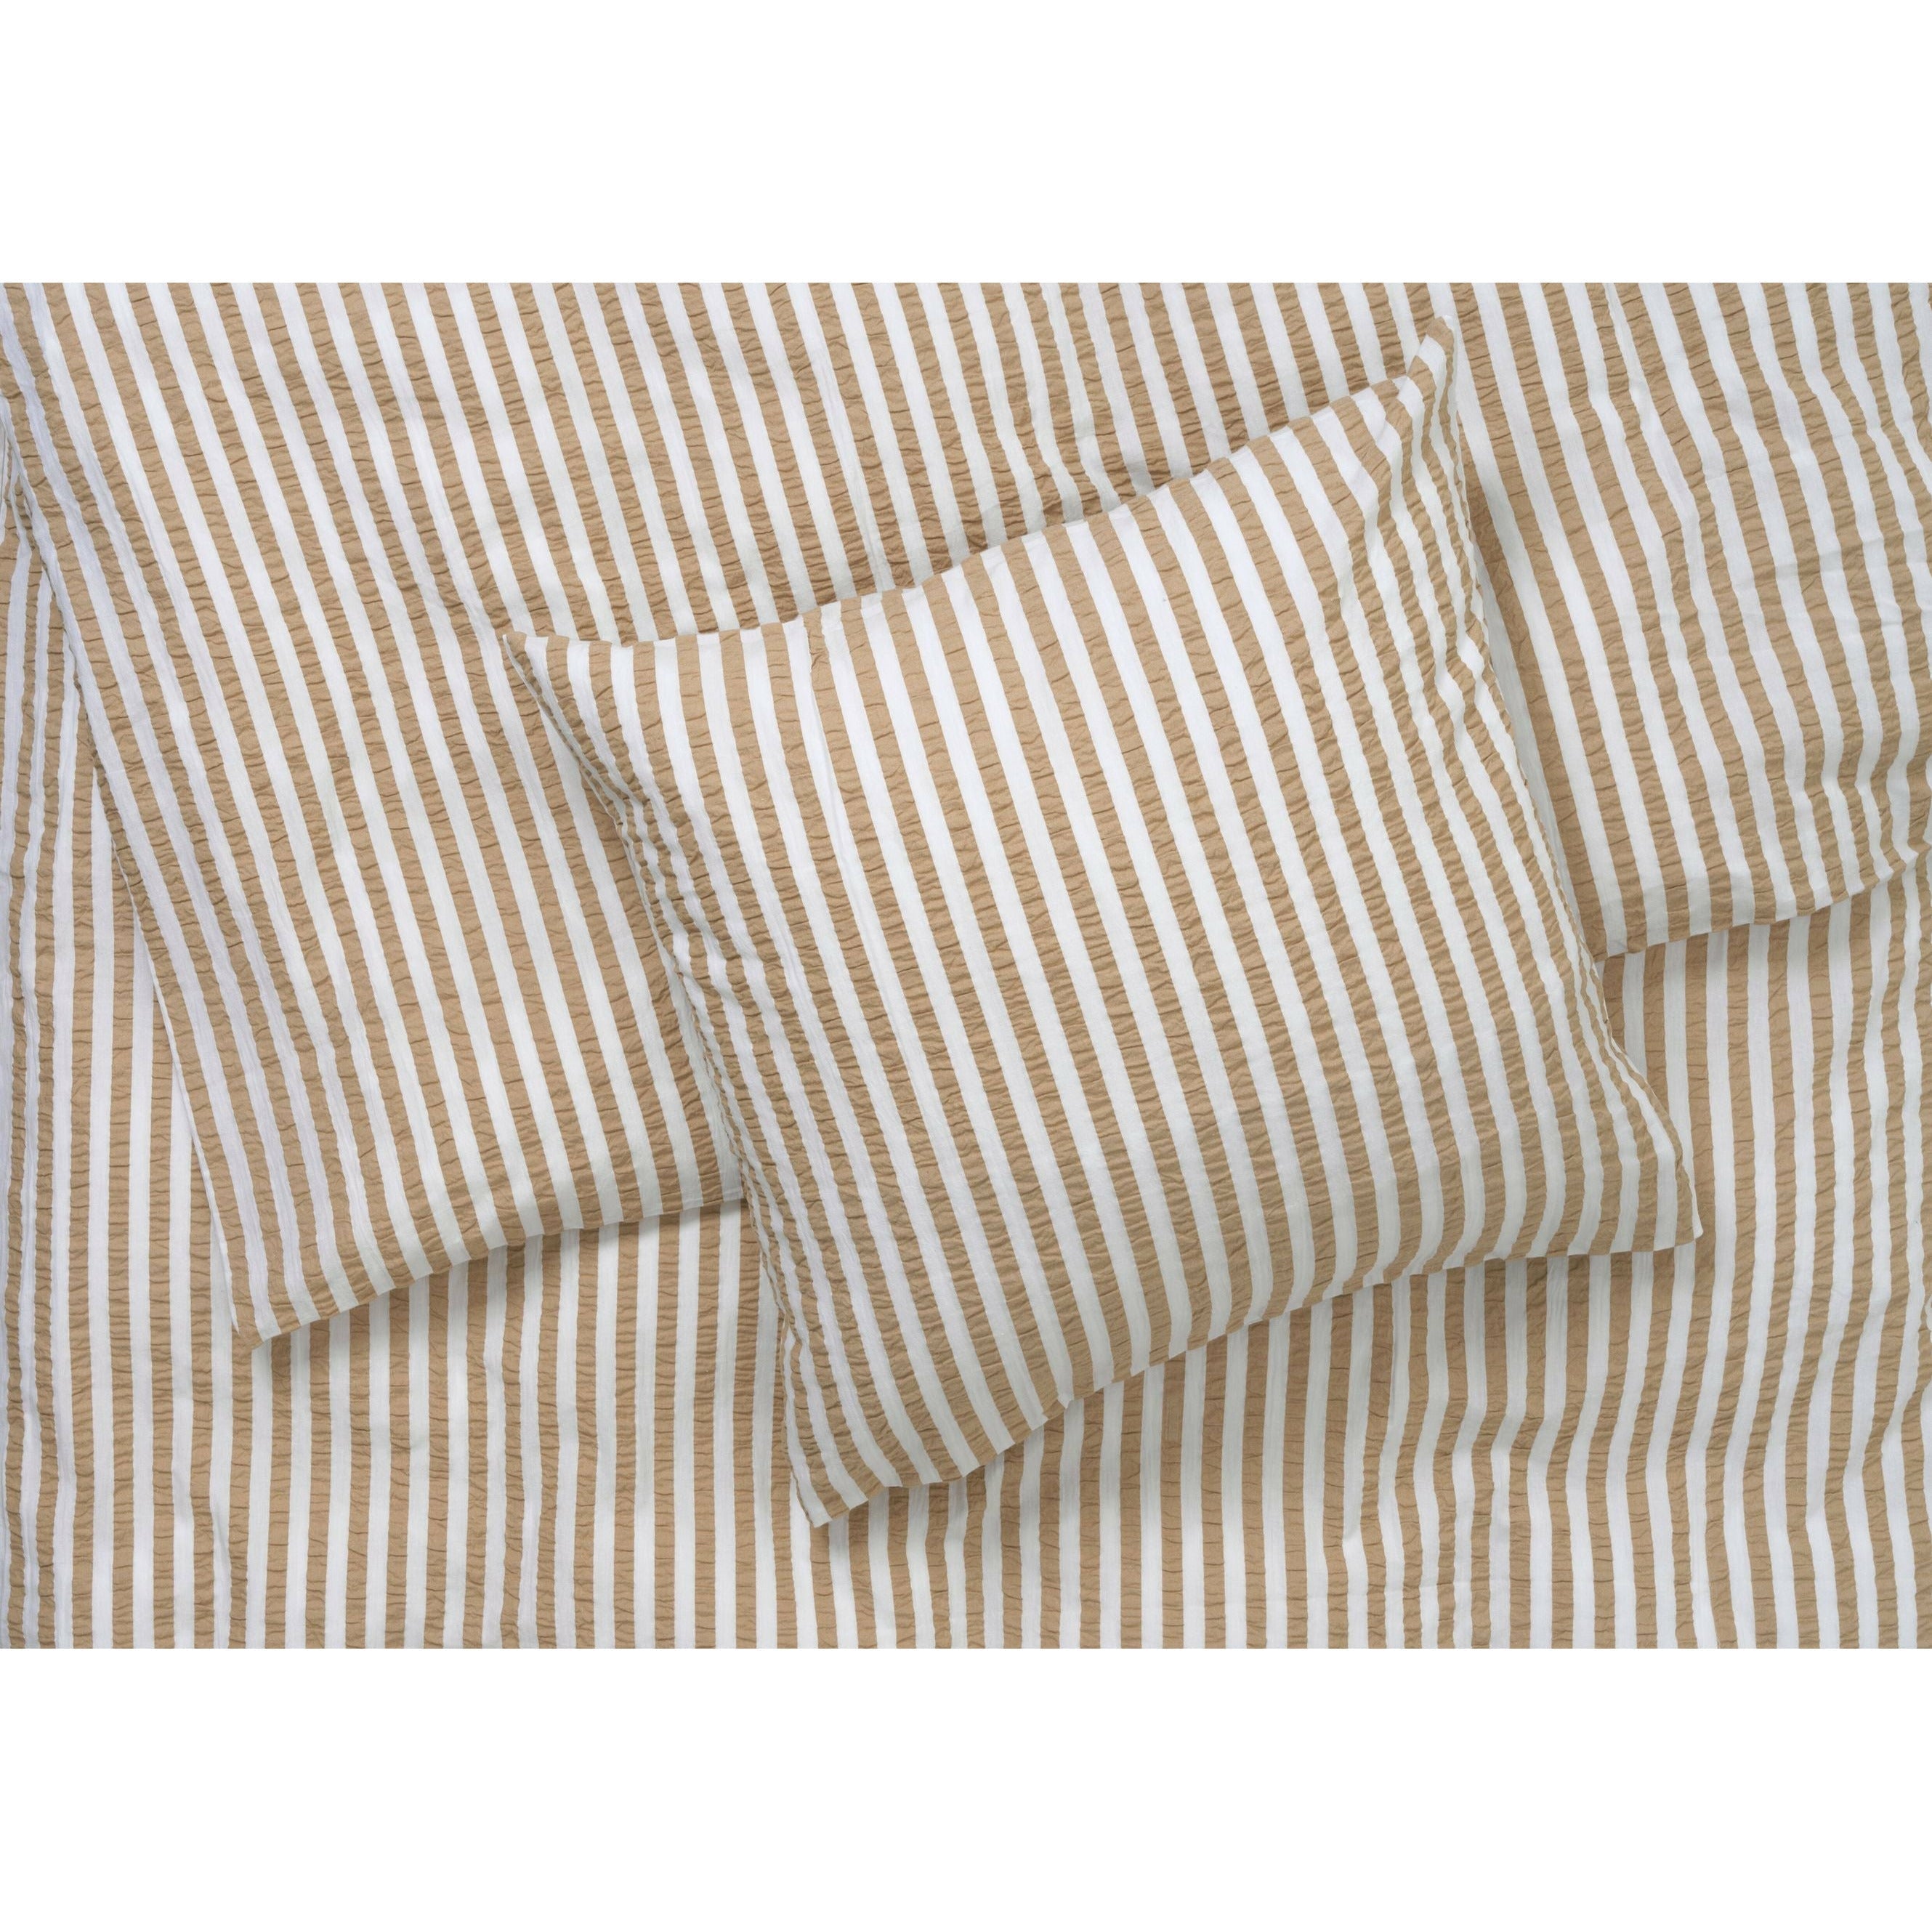 Juna Bæk & Wave Lines sängkläder 140x220 cm, sand/vit